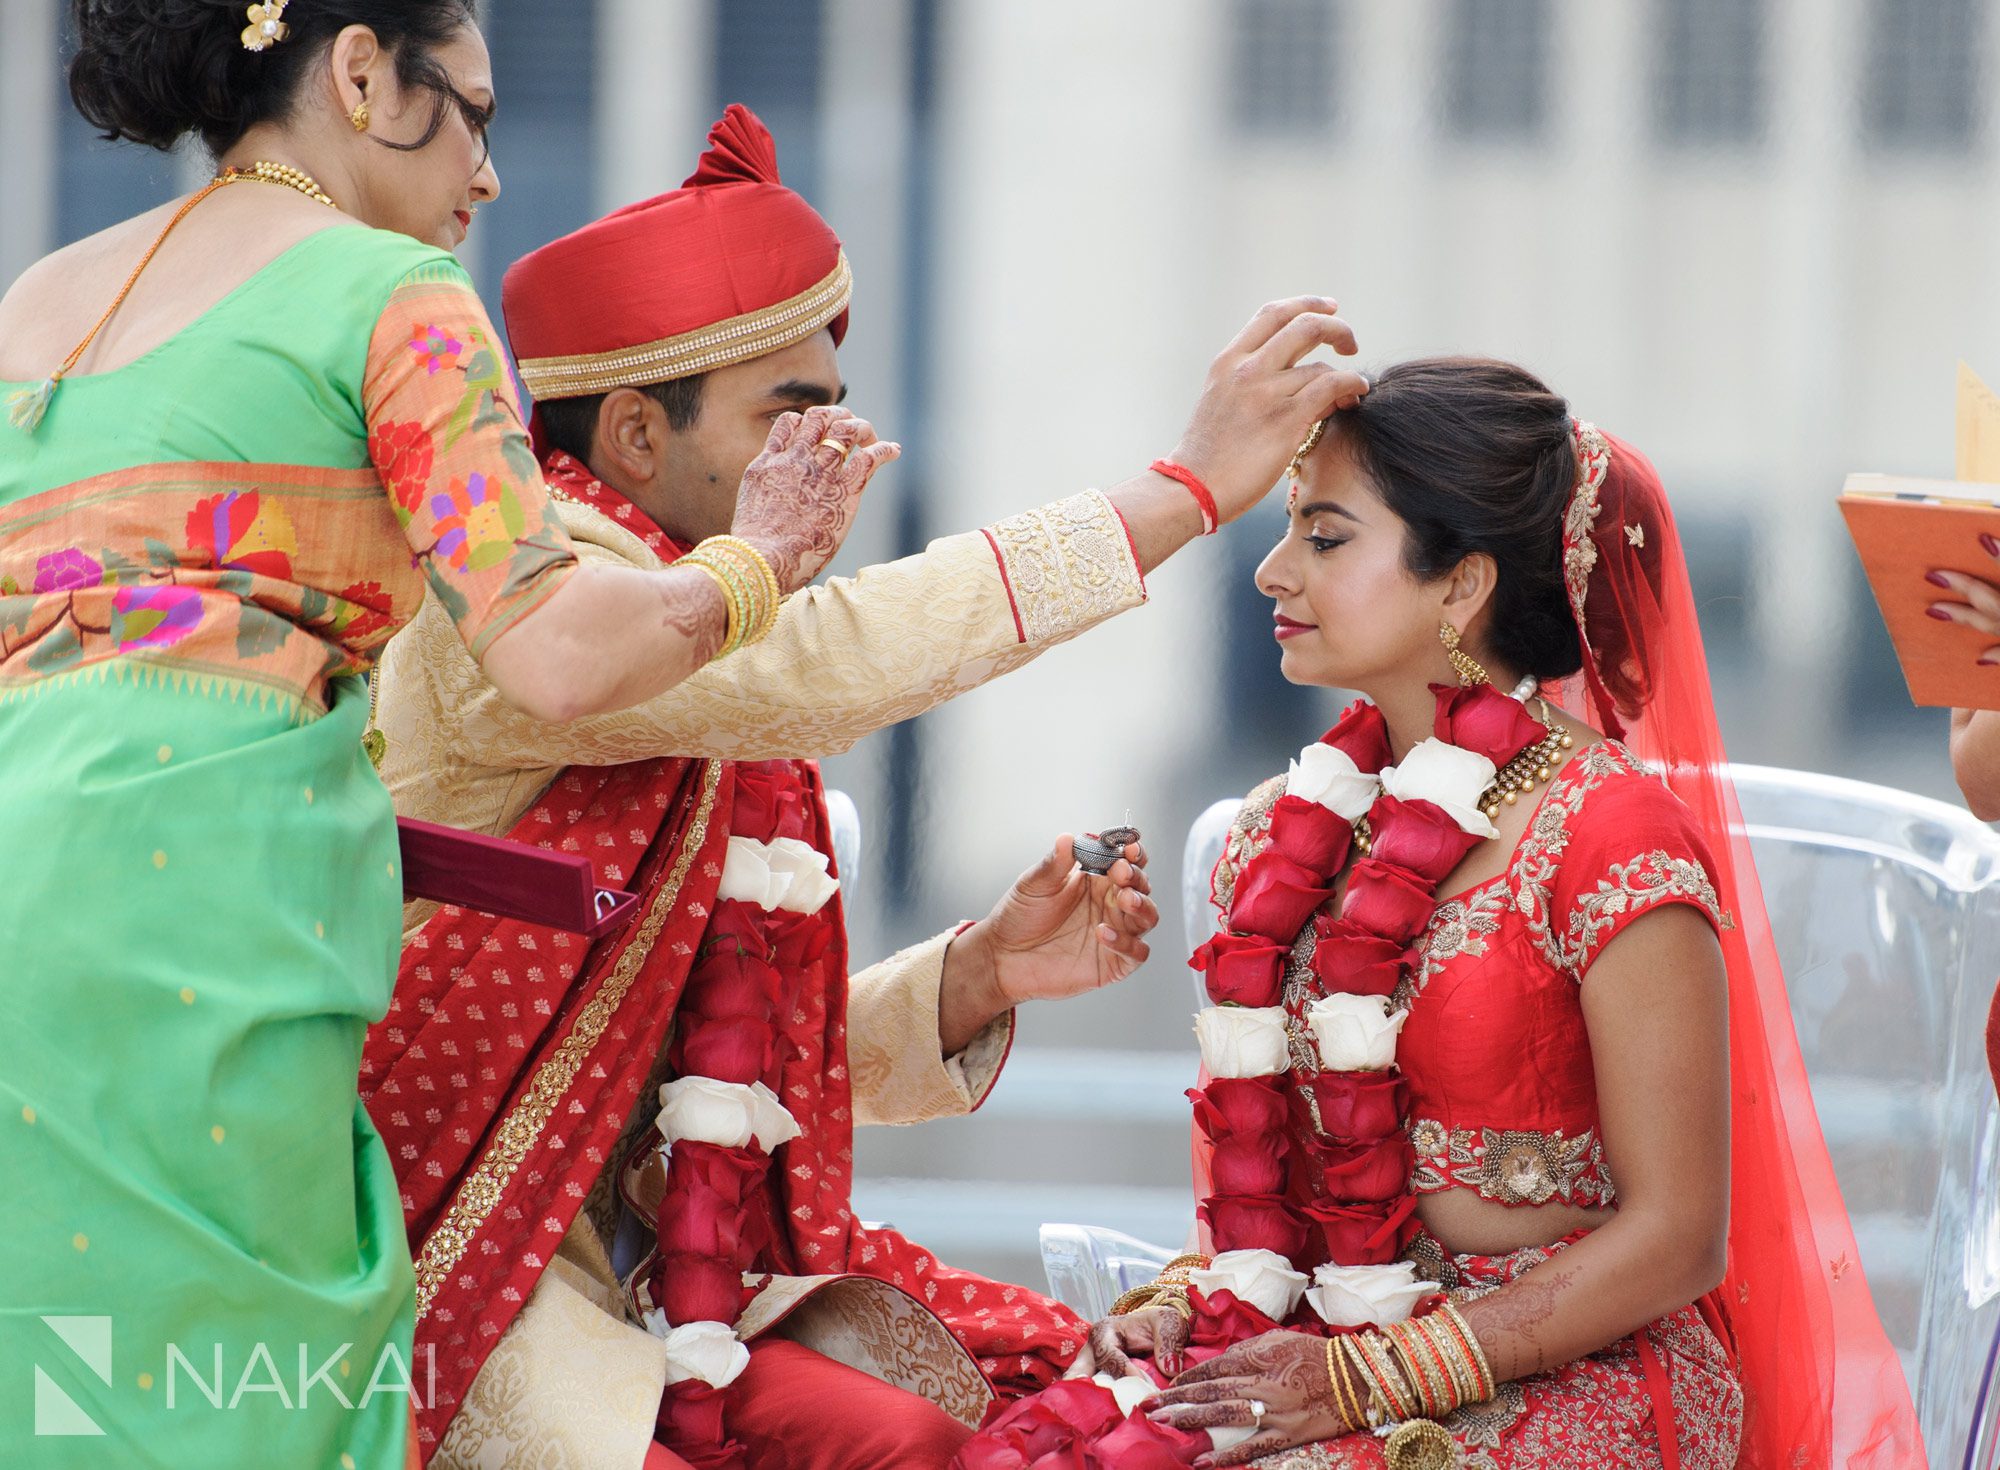 chicago loews wedding pictures indian hindu